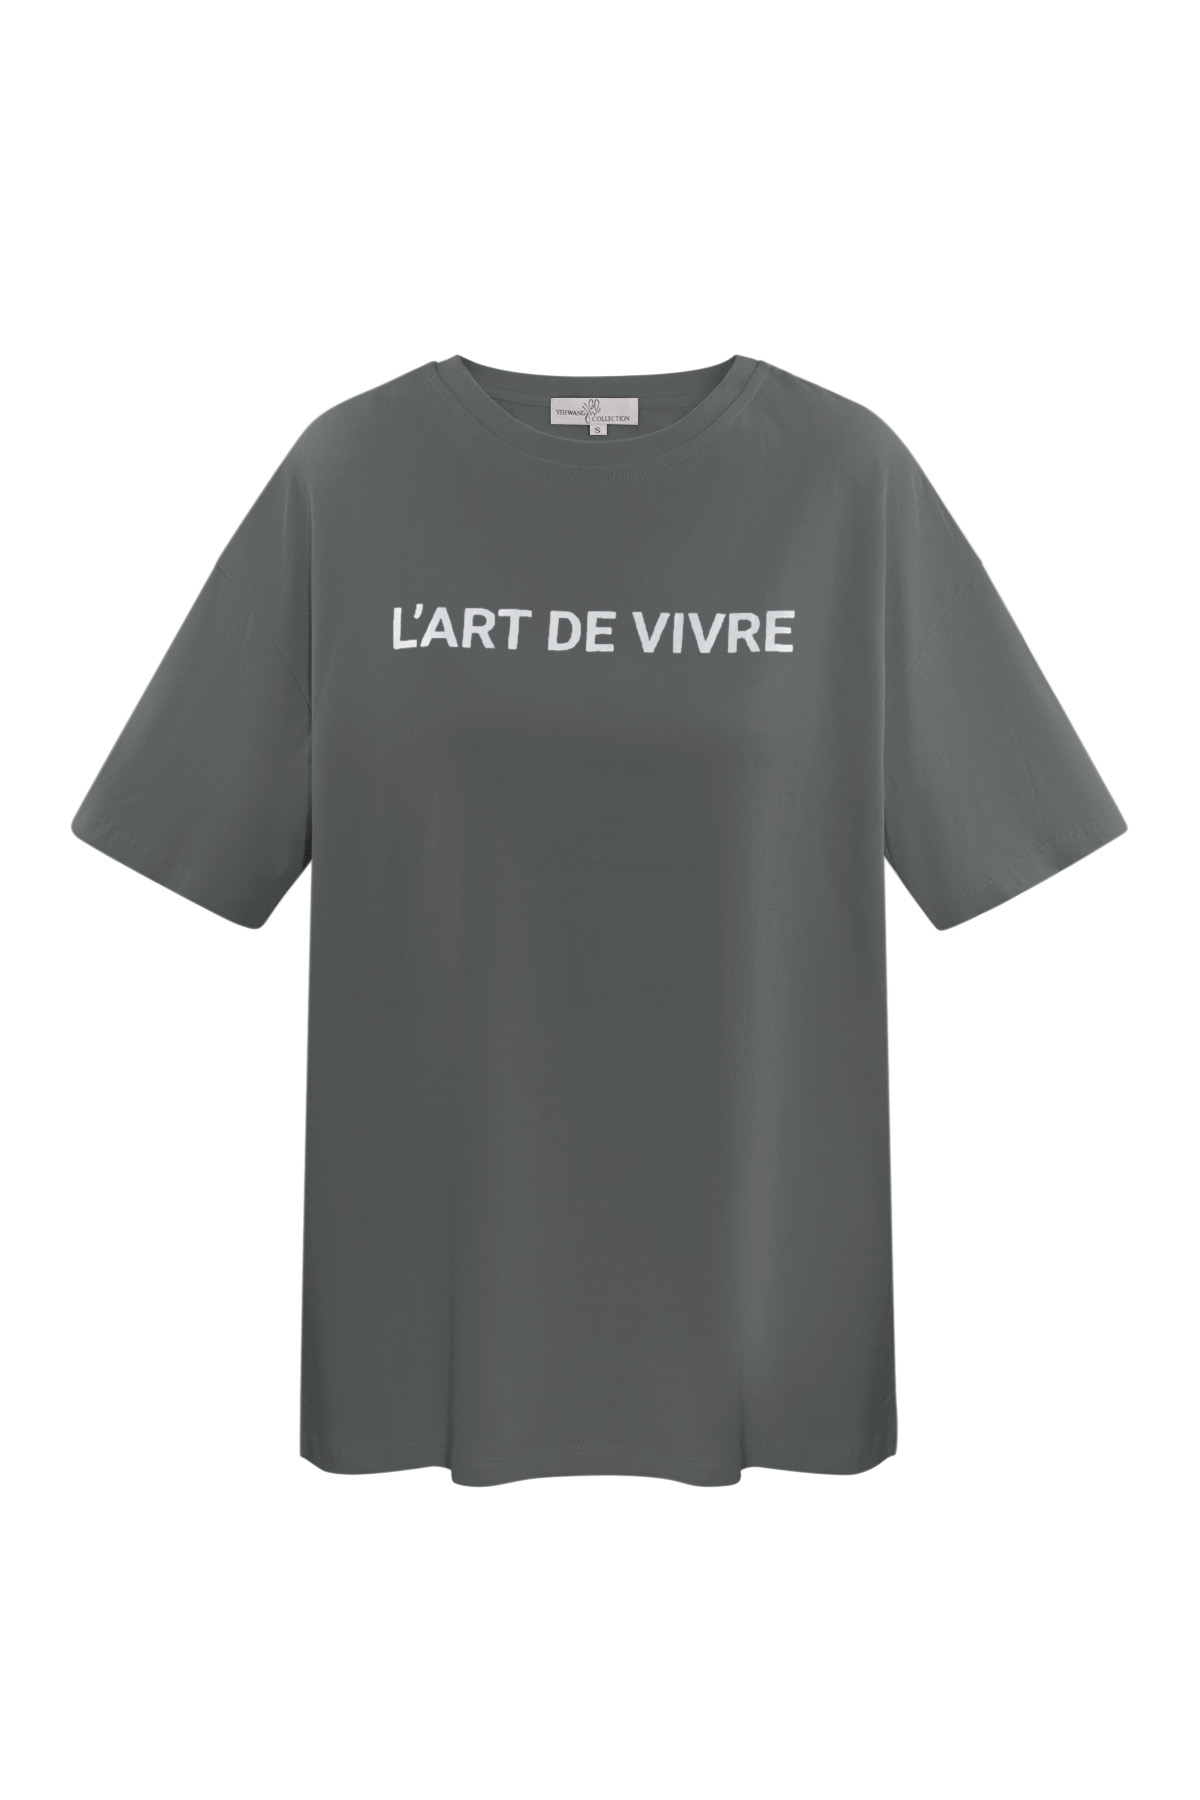 T-Shirt l'art de vivre - grau silber